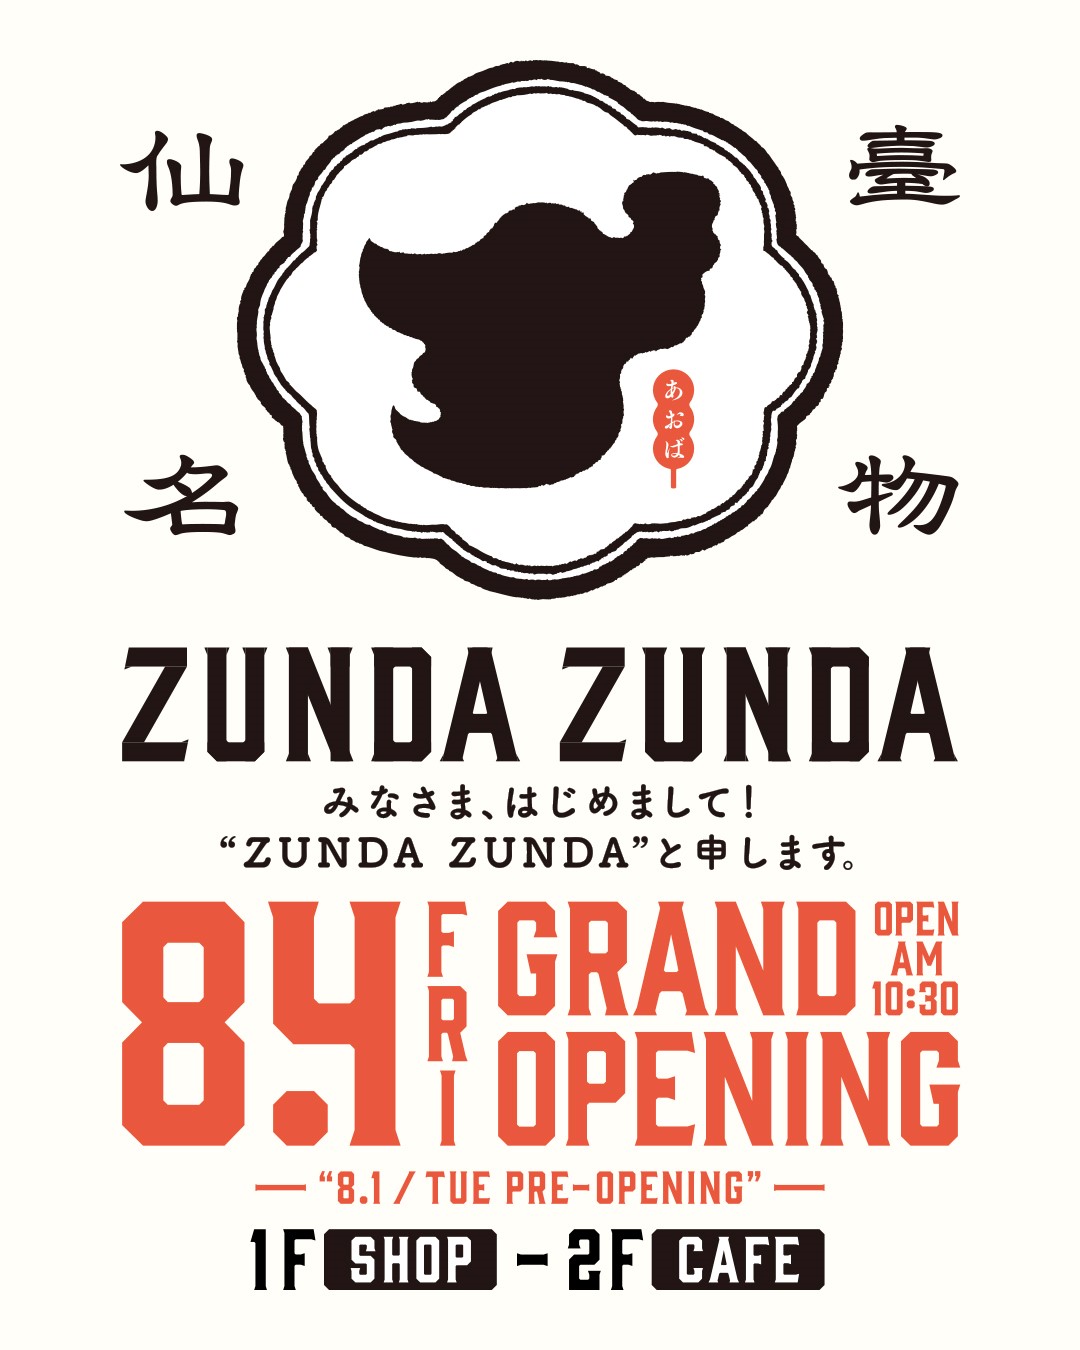 ZUNDAcafeグランドオープンのお知らせポスター